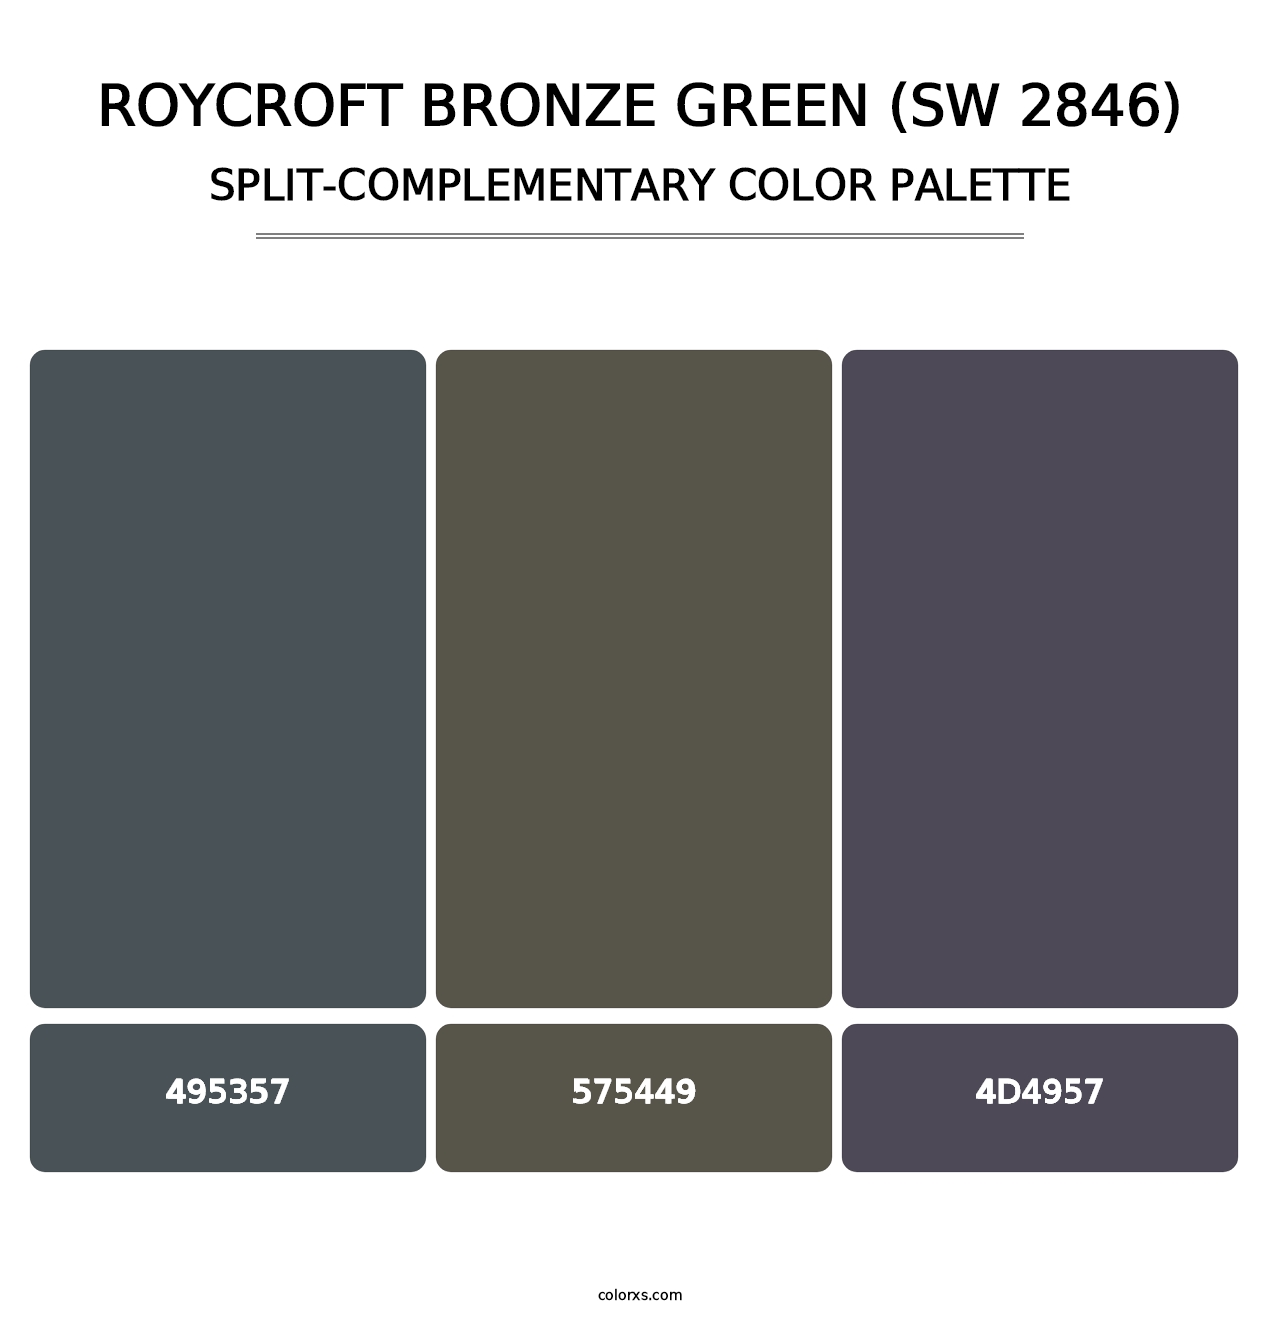 Roycroft Bronze Green (SW 2846) - Split-Complementary Color Palette